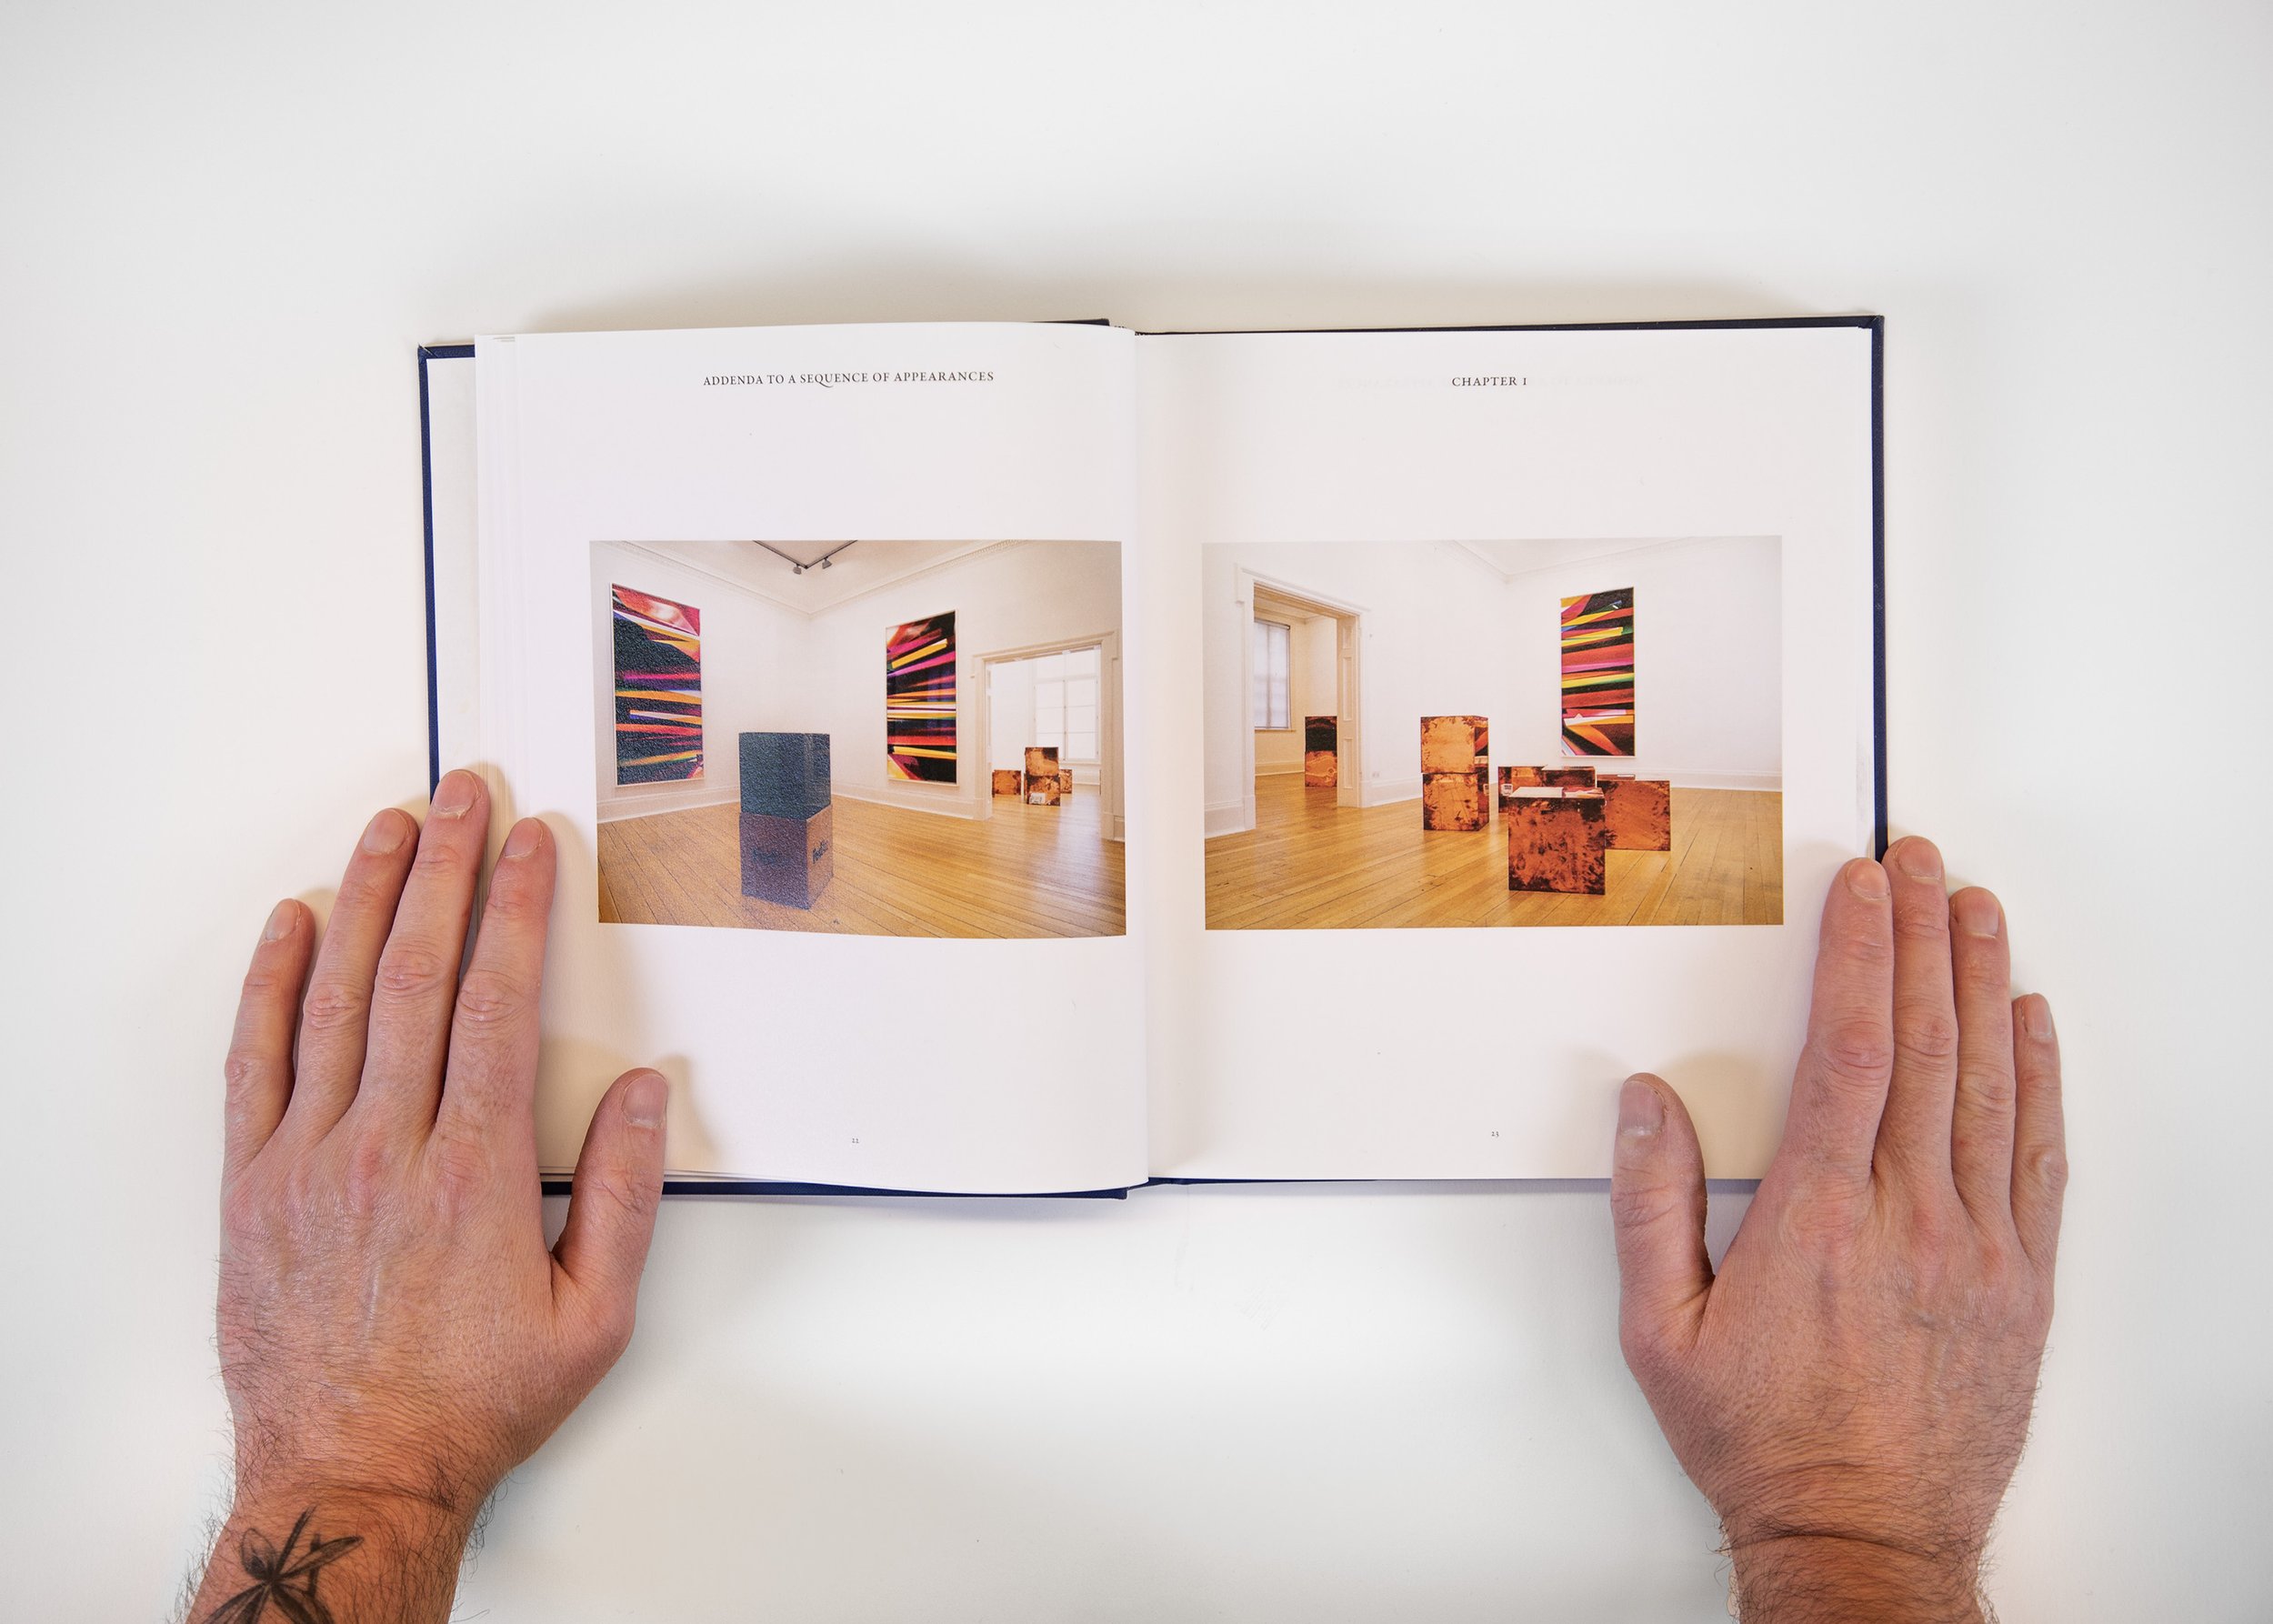   Addenda to a Sequence of Appearances: Walead Beshty Studios inc. at Dane Chantala Associates Ltd., 2009–2023   Monograph, (London: Hurtwood Press, 2023). 